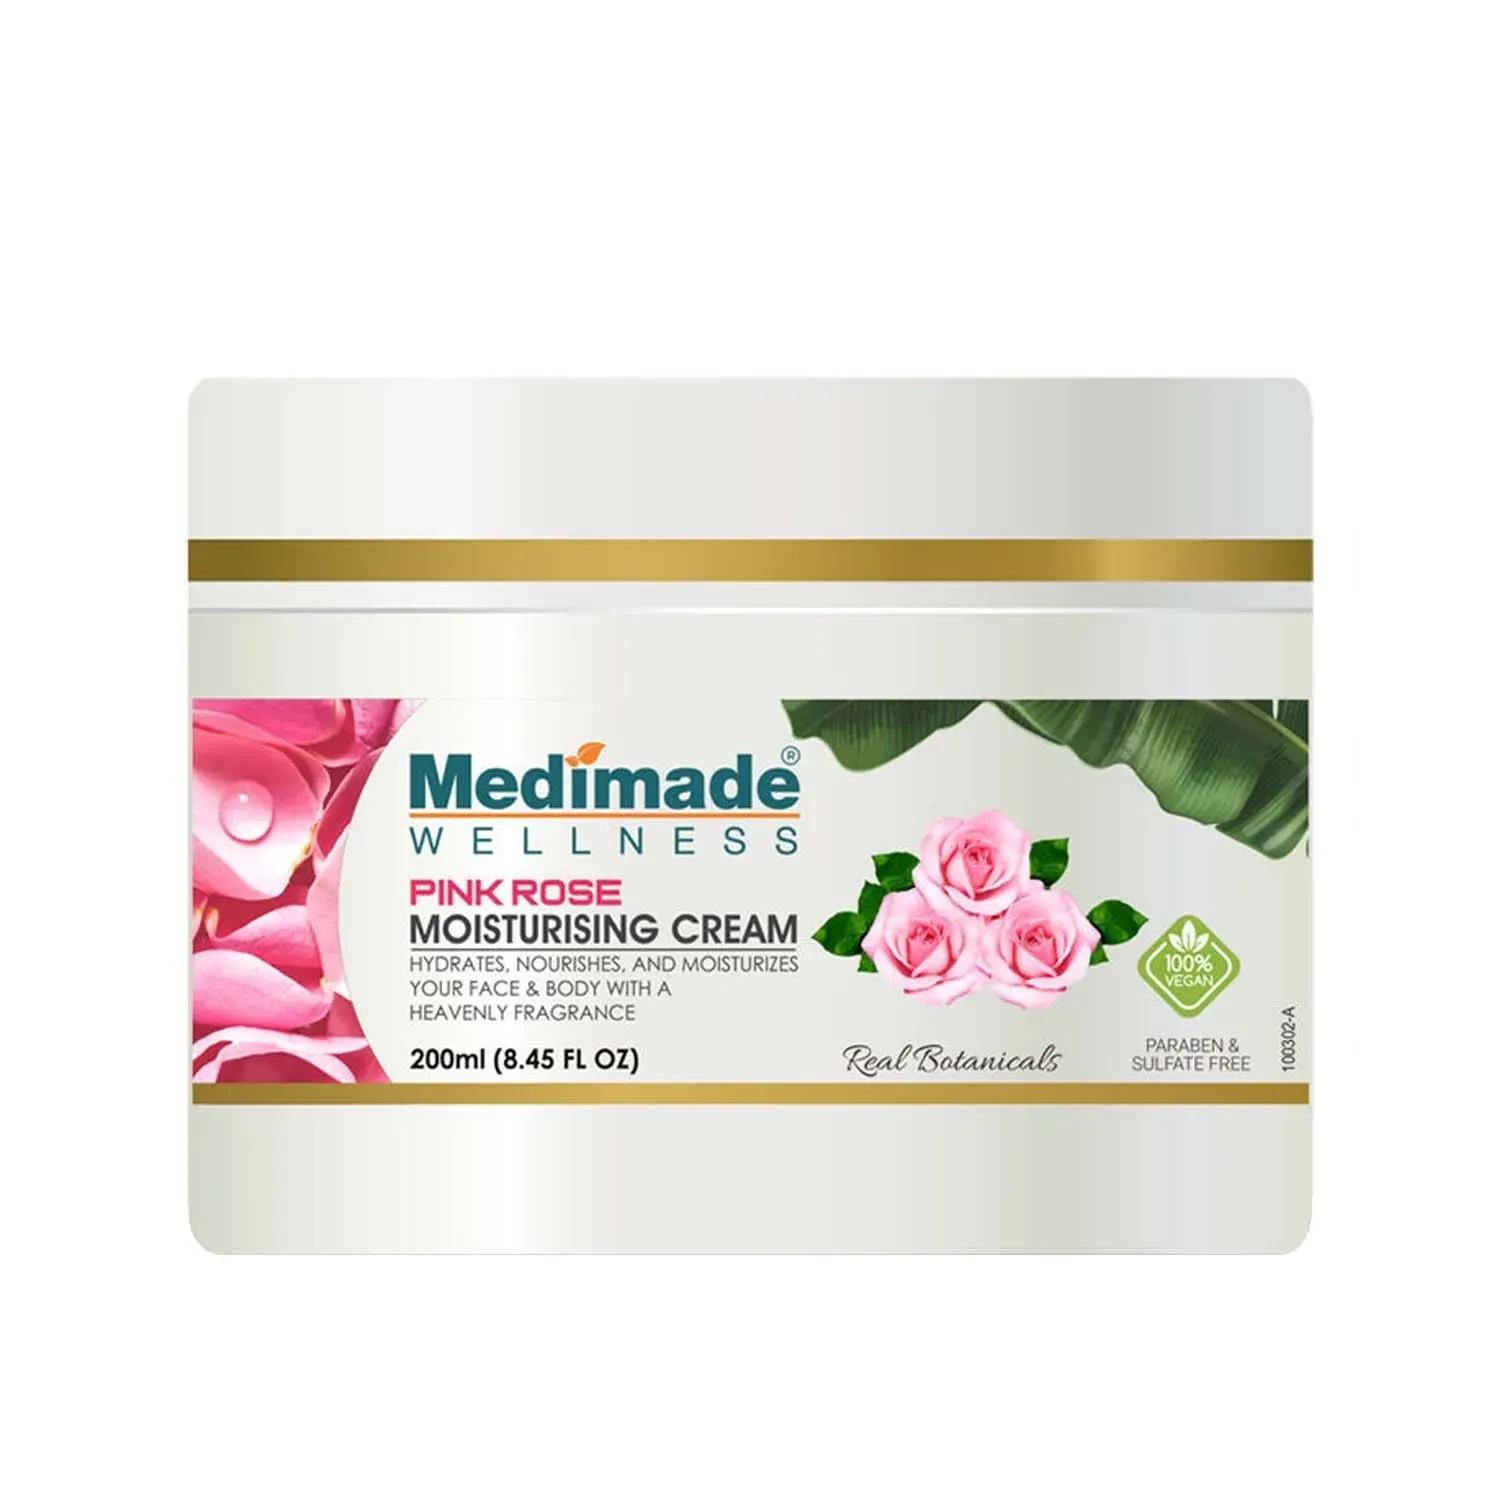 medimade pink rose moisturising cream (200g)